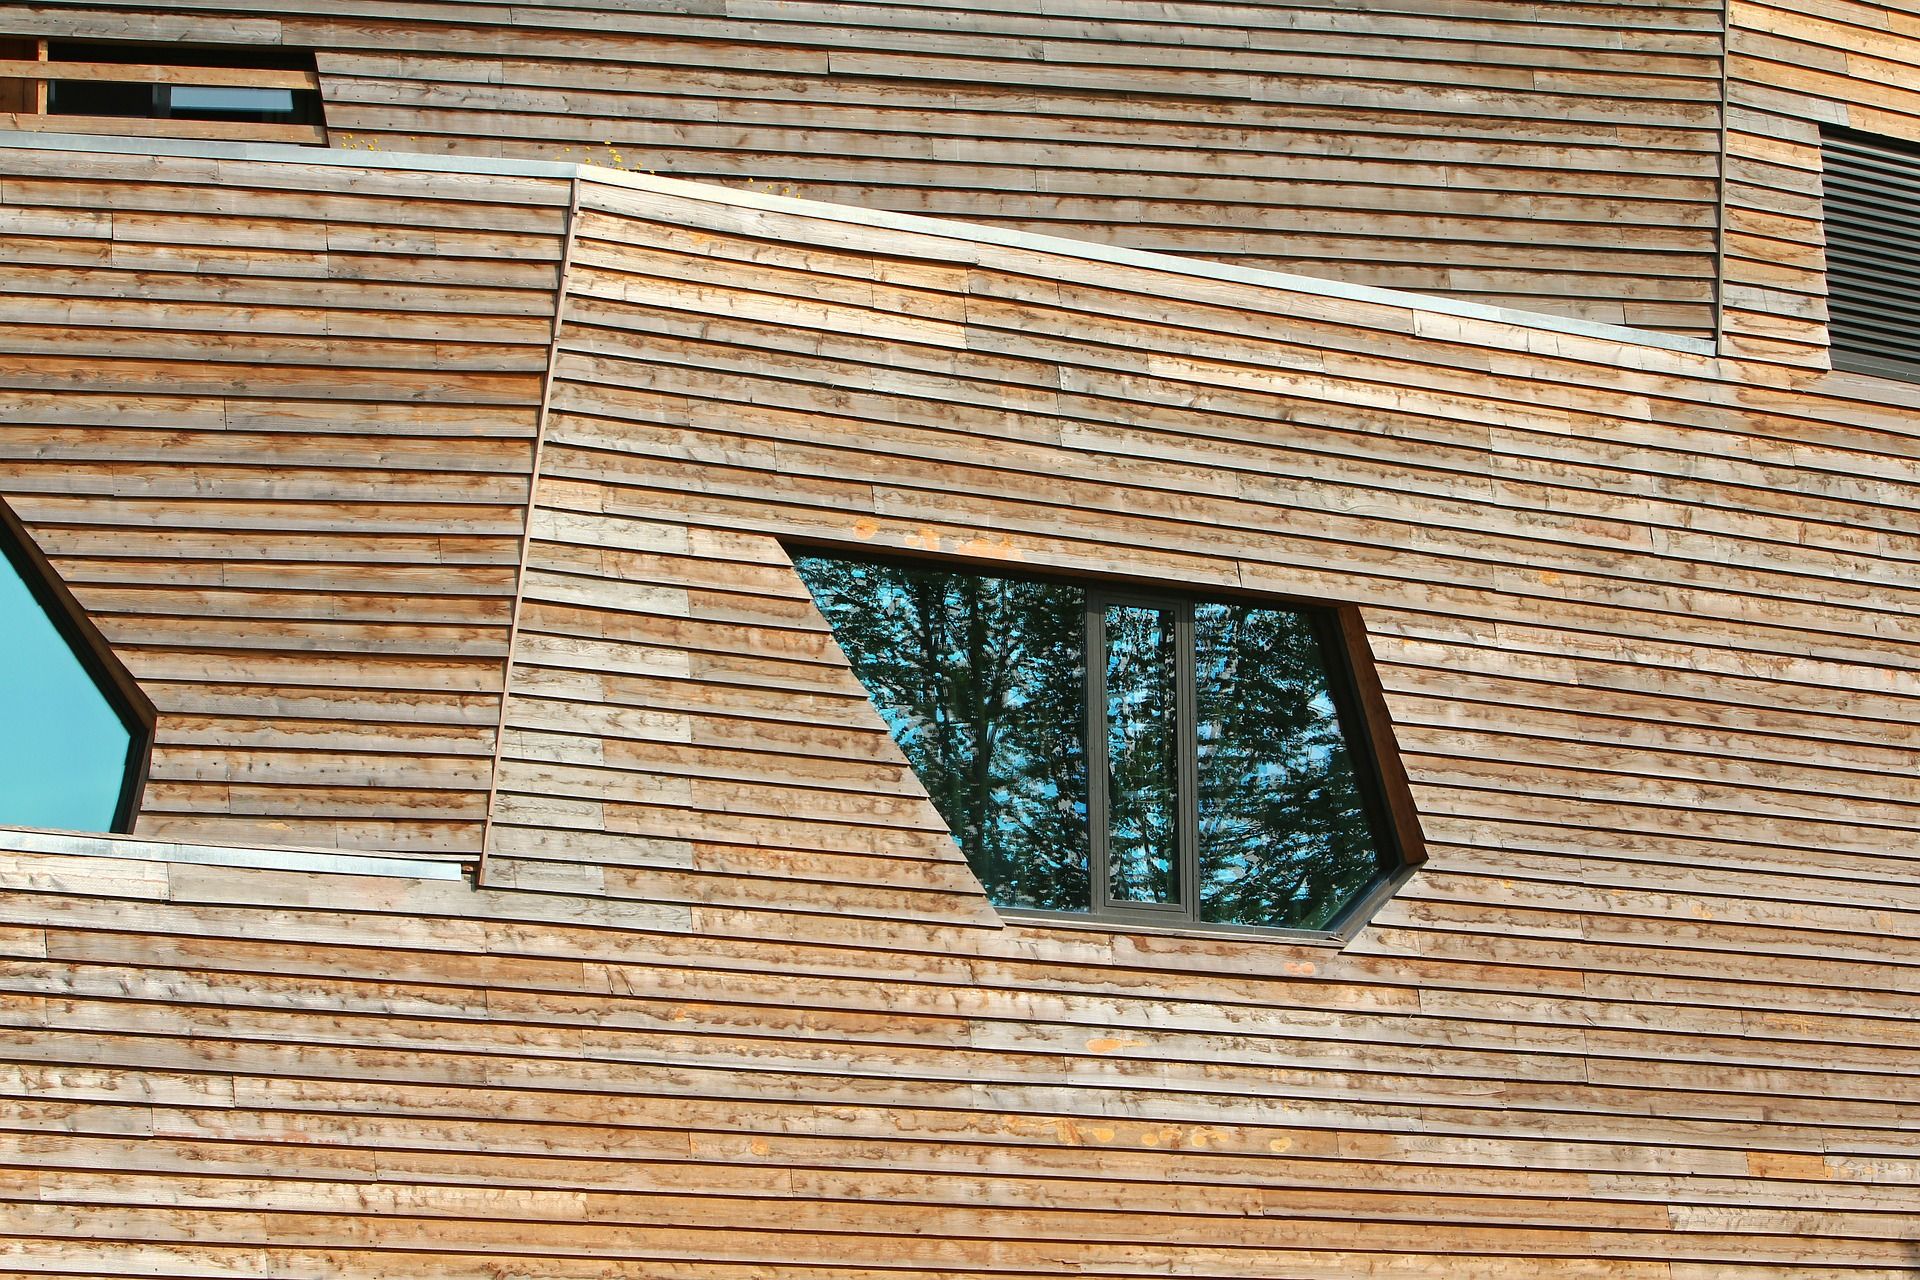 Moderne Holzfassade